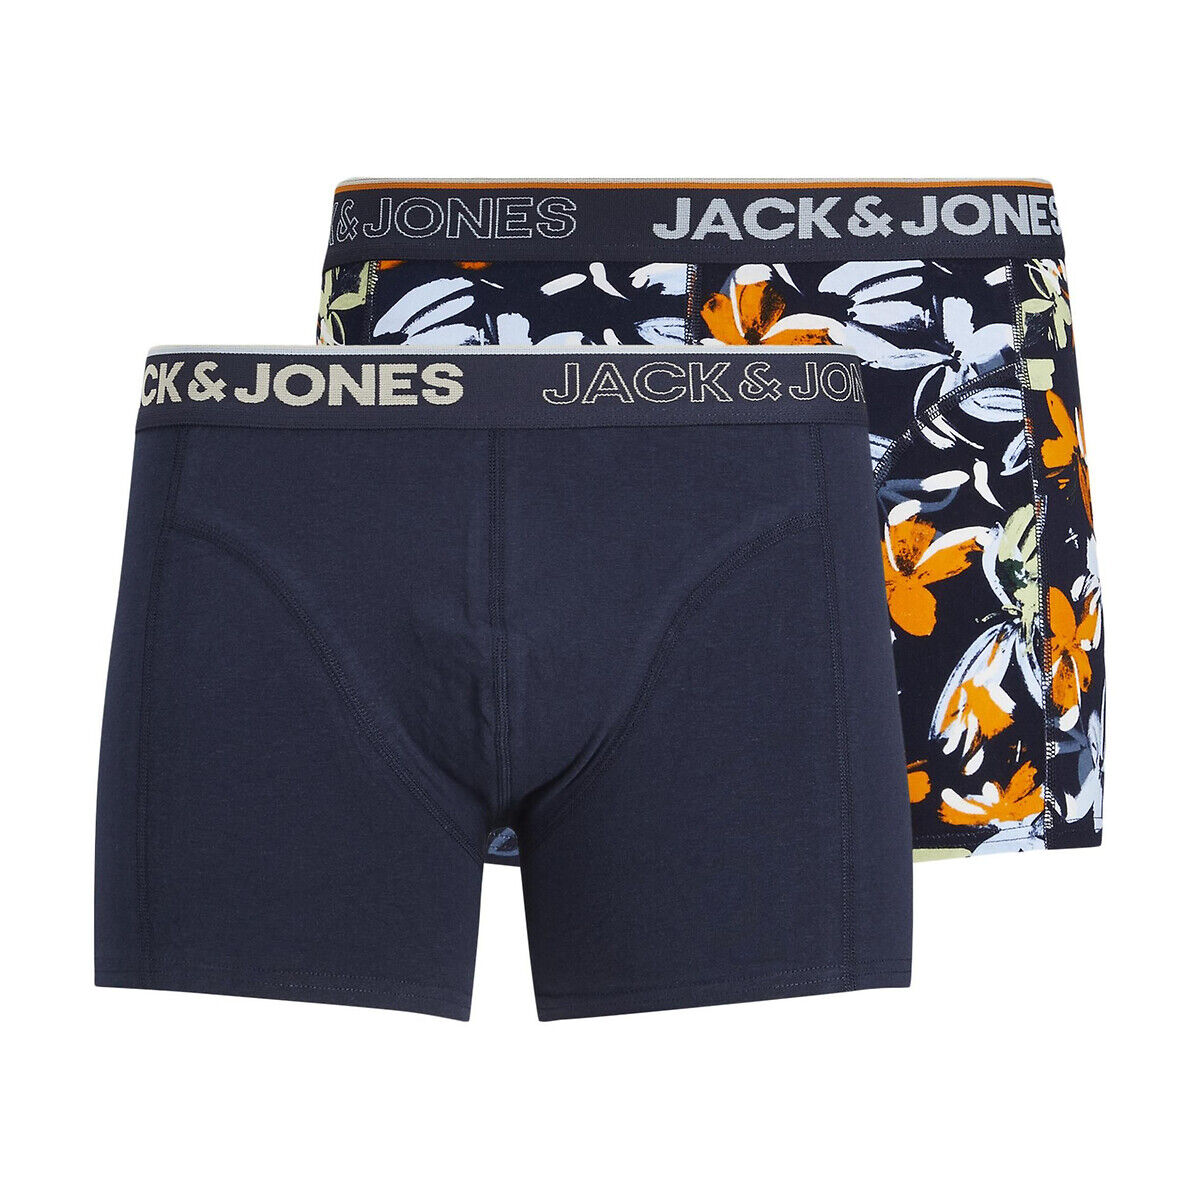 JACK & JONES 2er-Pack Shortys (1x uni + 1x bedruckt) BLAU